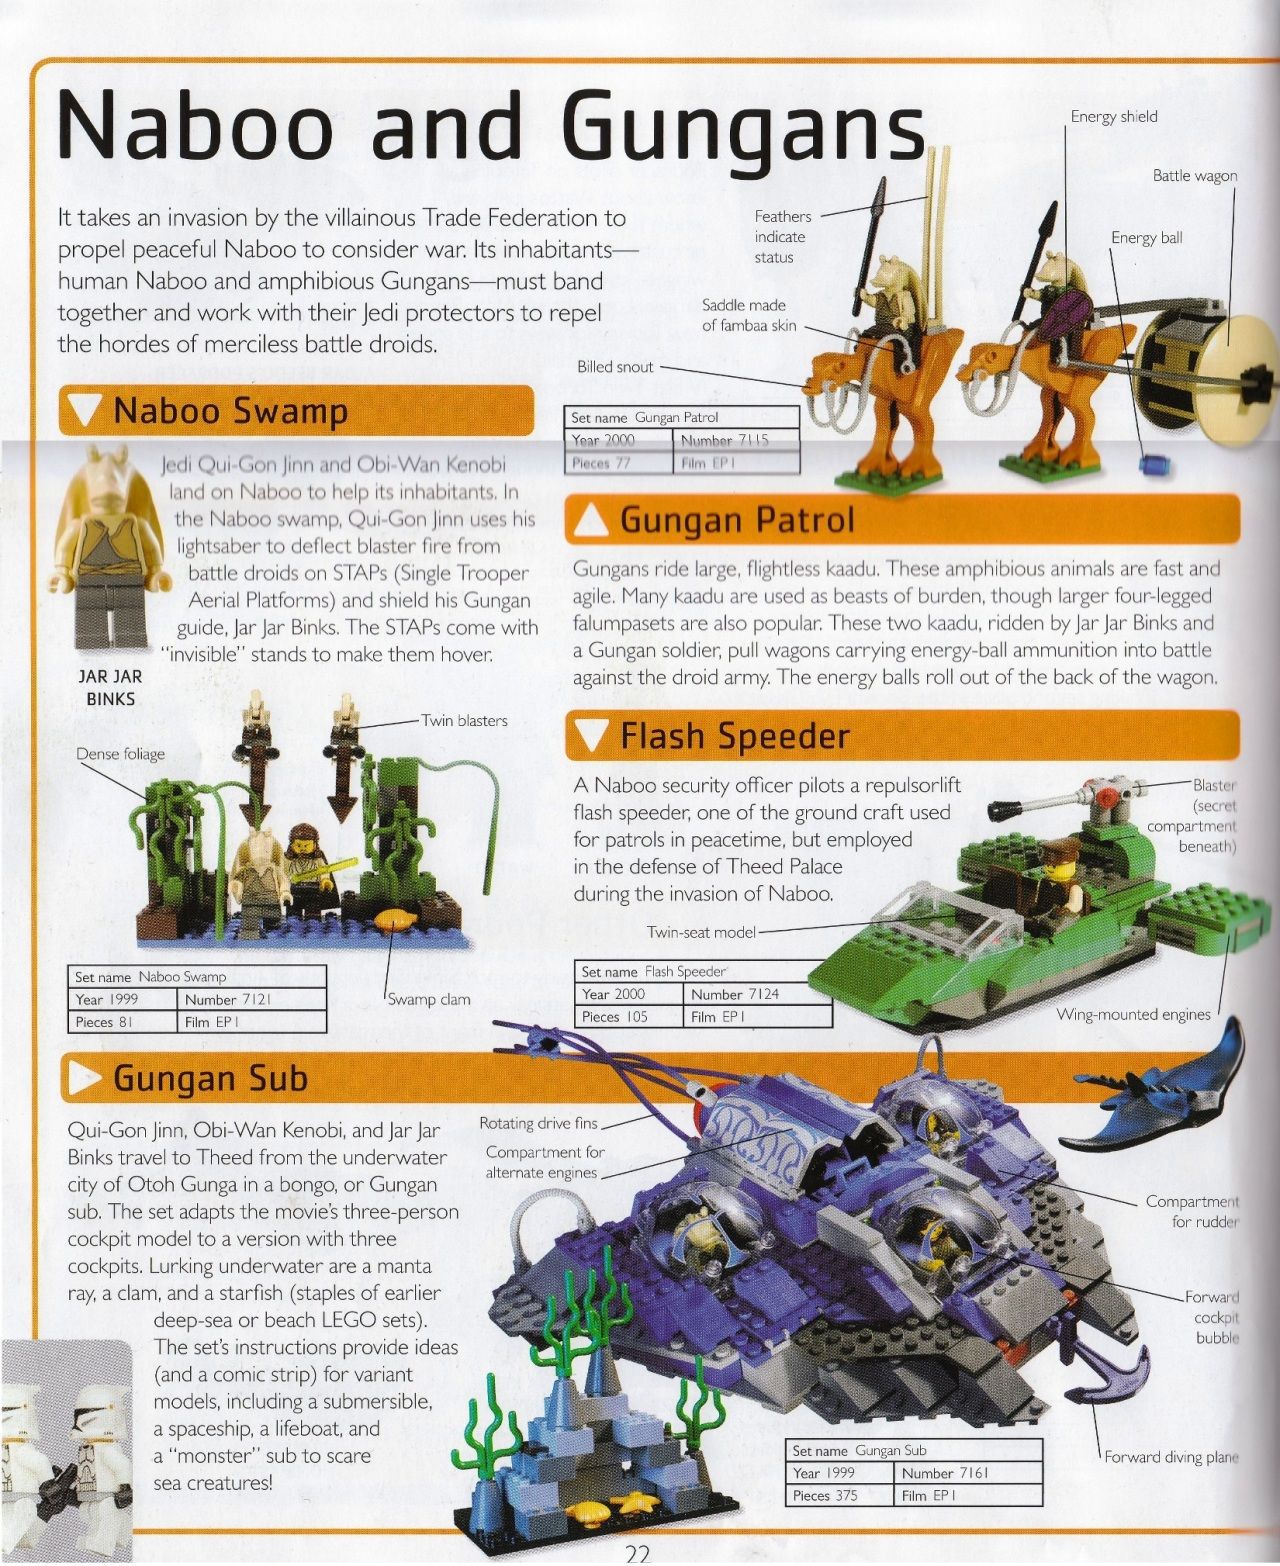 Lego Star Wars The Visual Dictionary 2009 Lego Star Wars The Visual Dictionary 2009 23